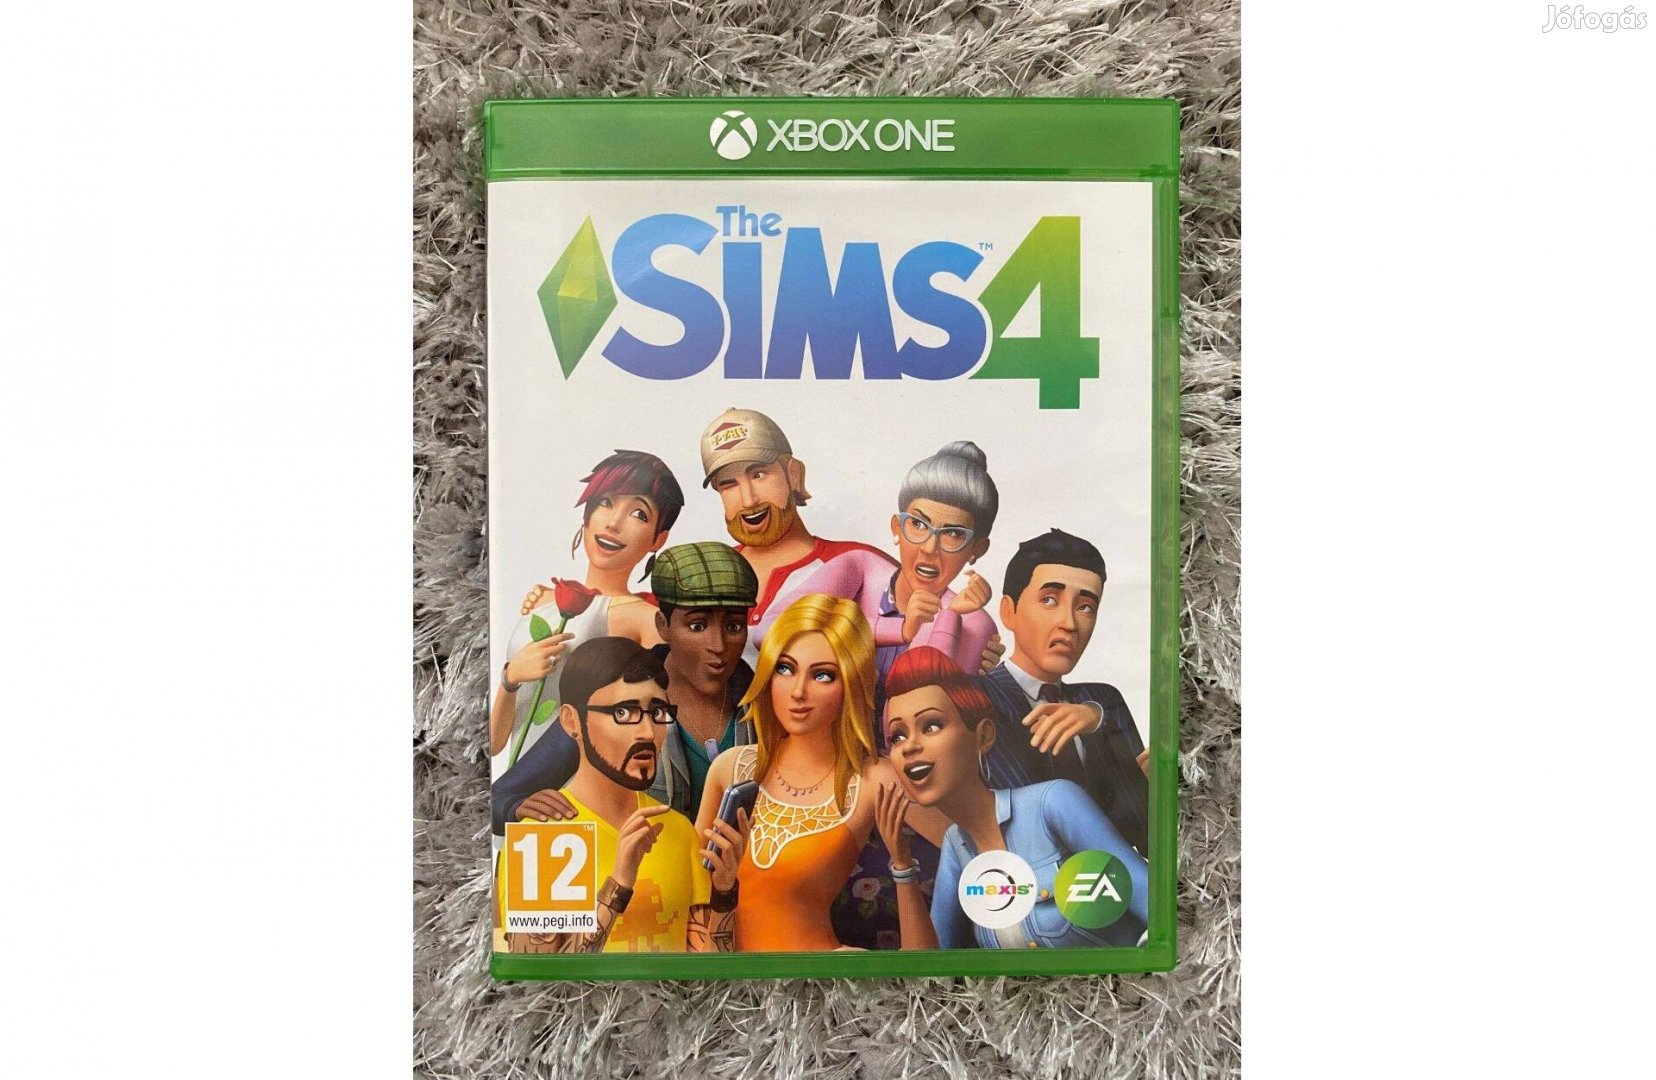 Sims 4, Xbox one konzolhoz eladó